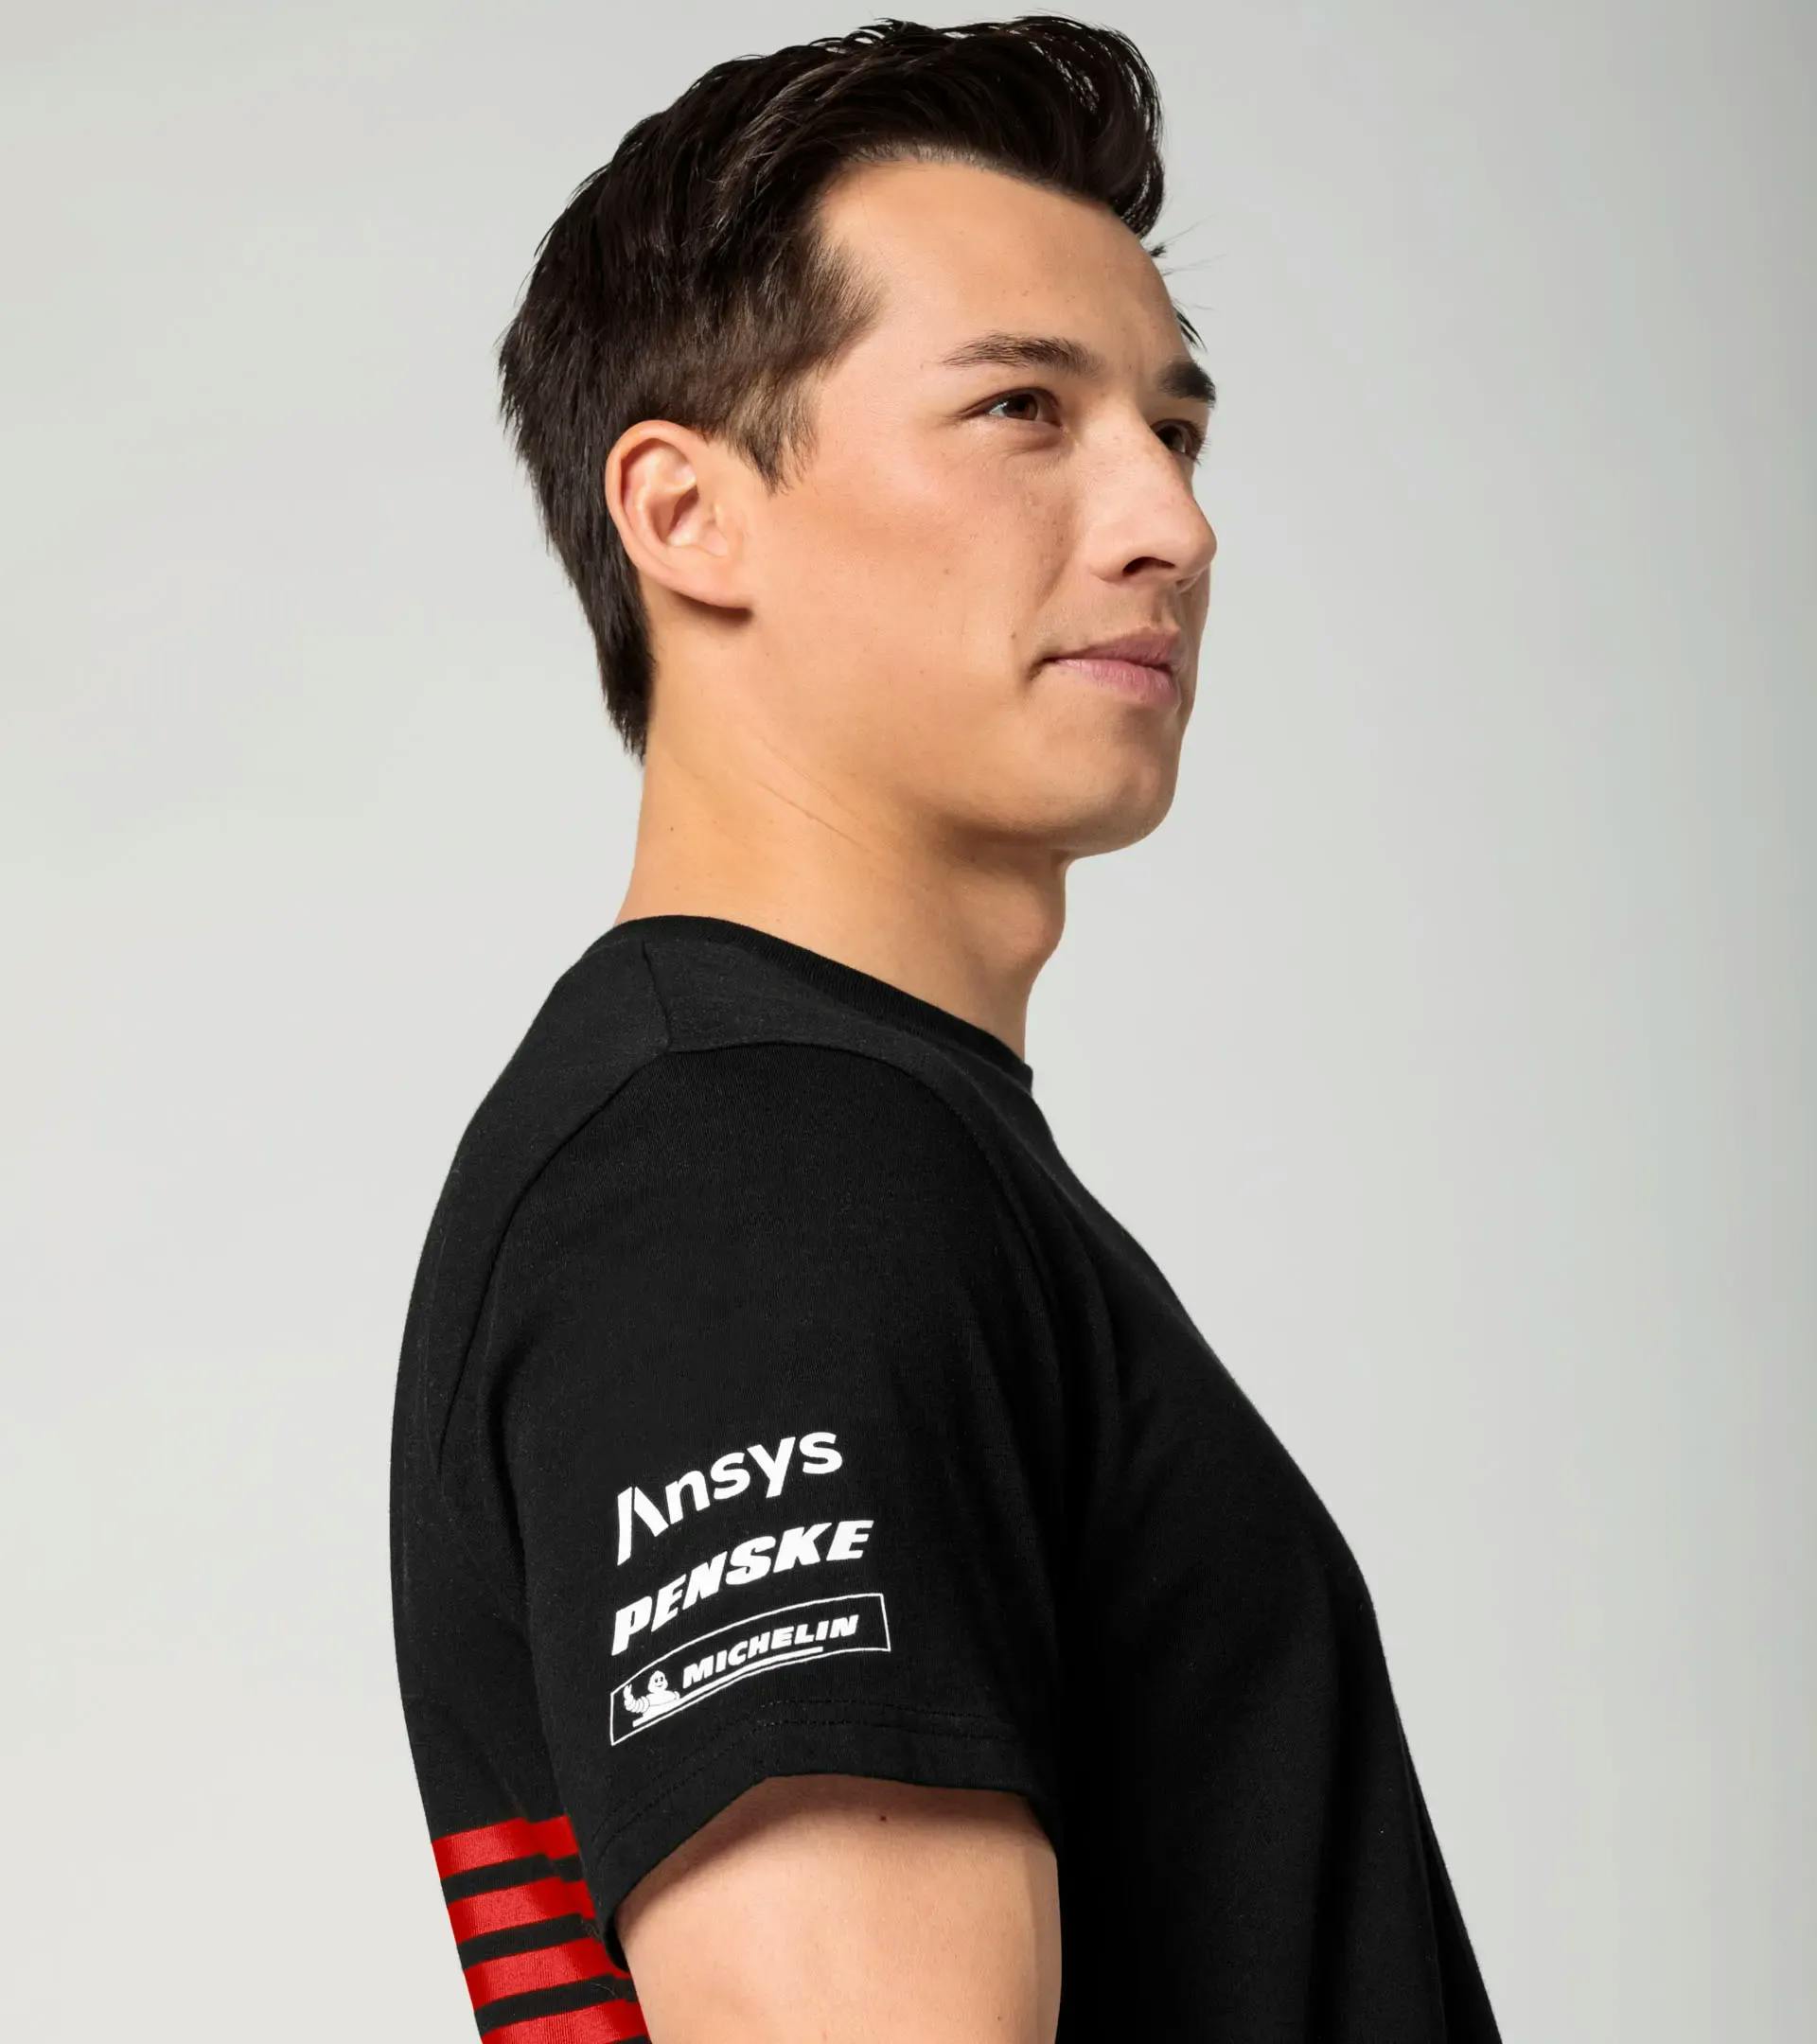 Camiseta unisex – Porsche Penske Motorsport 8